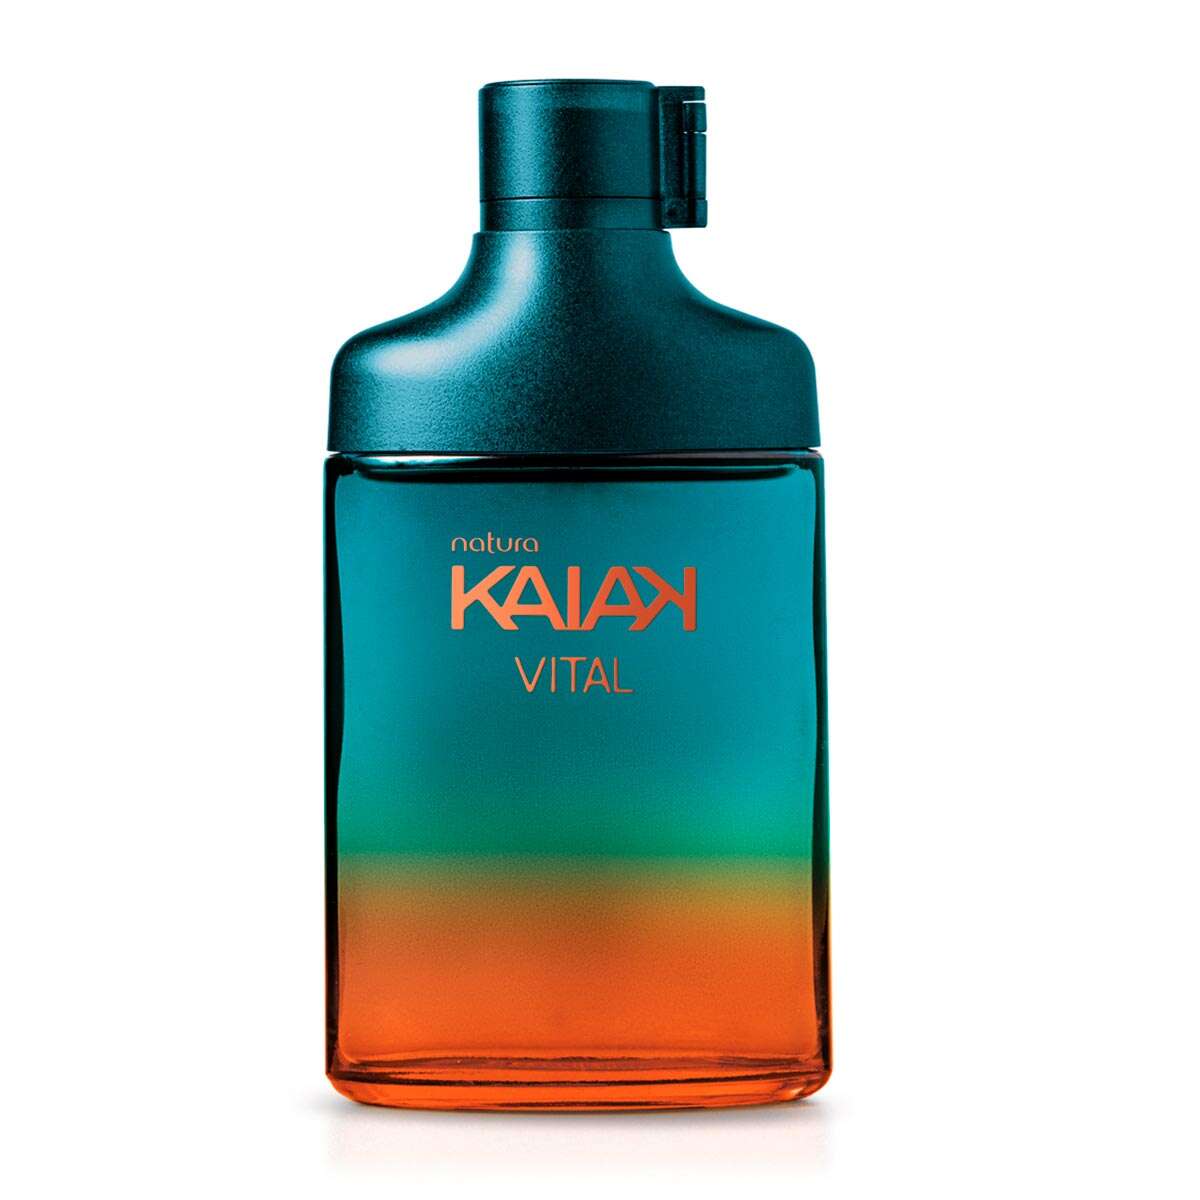 Kaiak Vital  Men's Cologne Deodorant - 100 ml